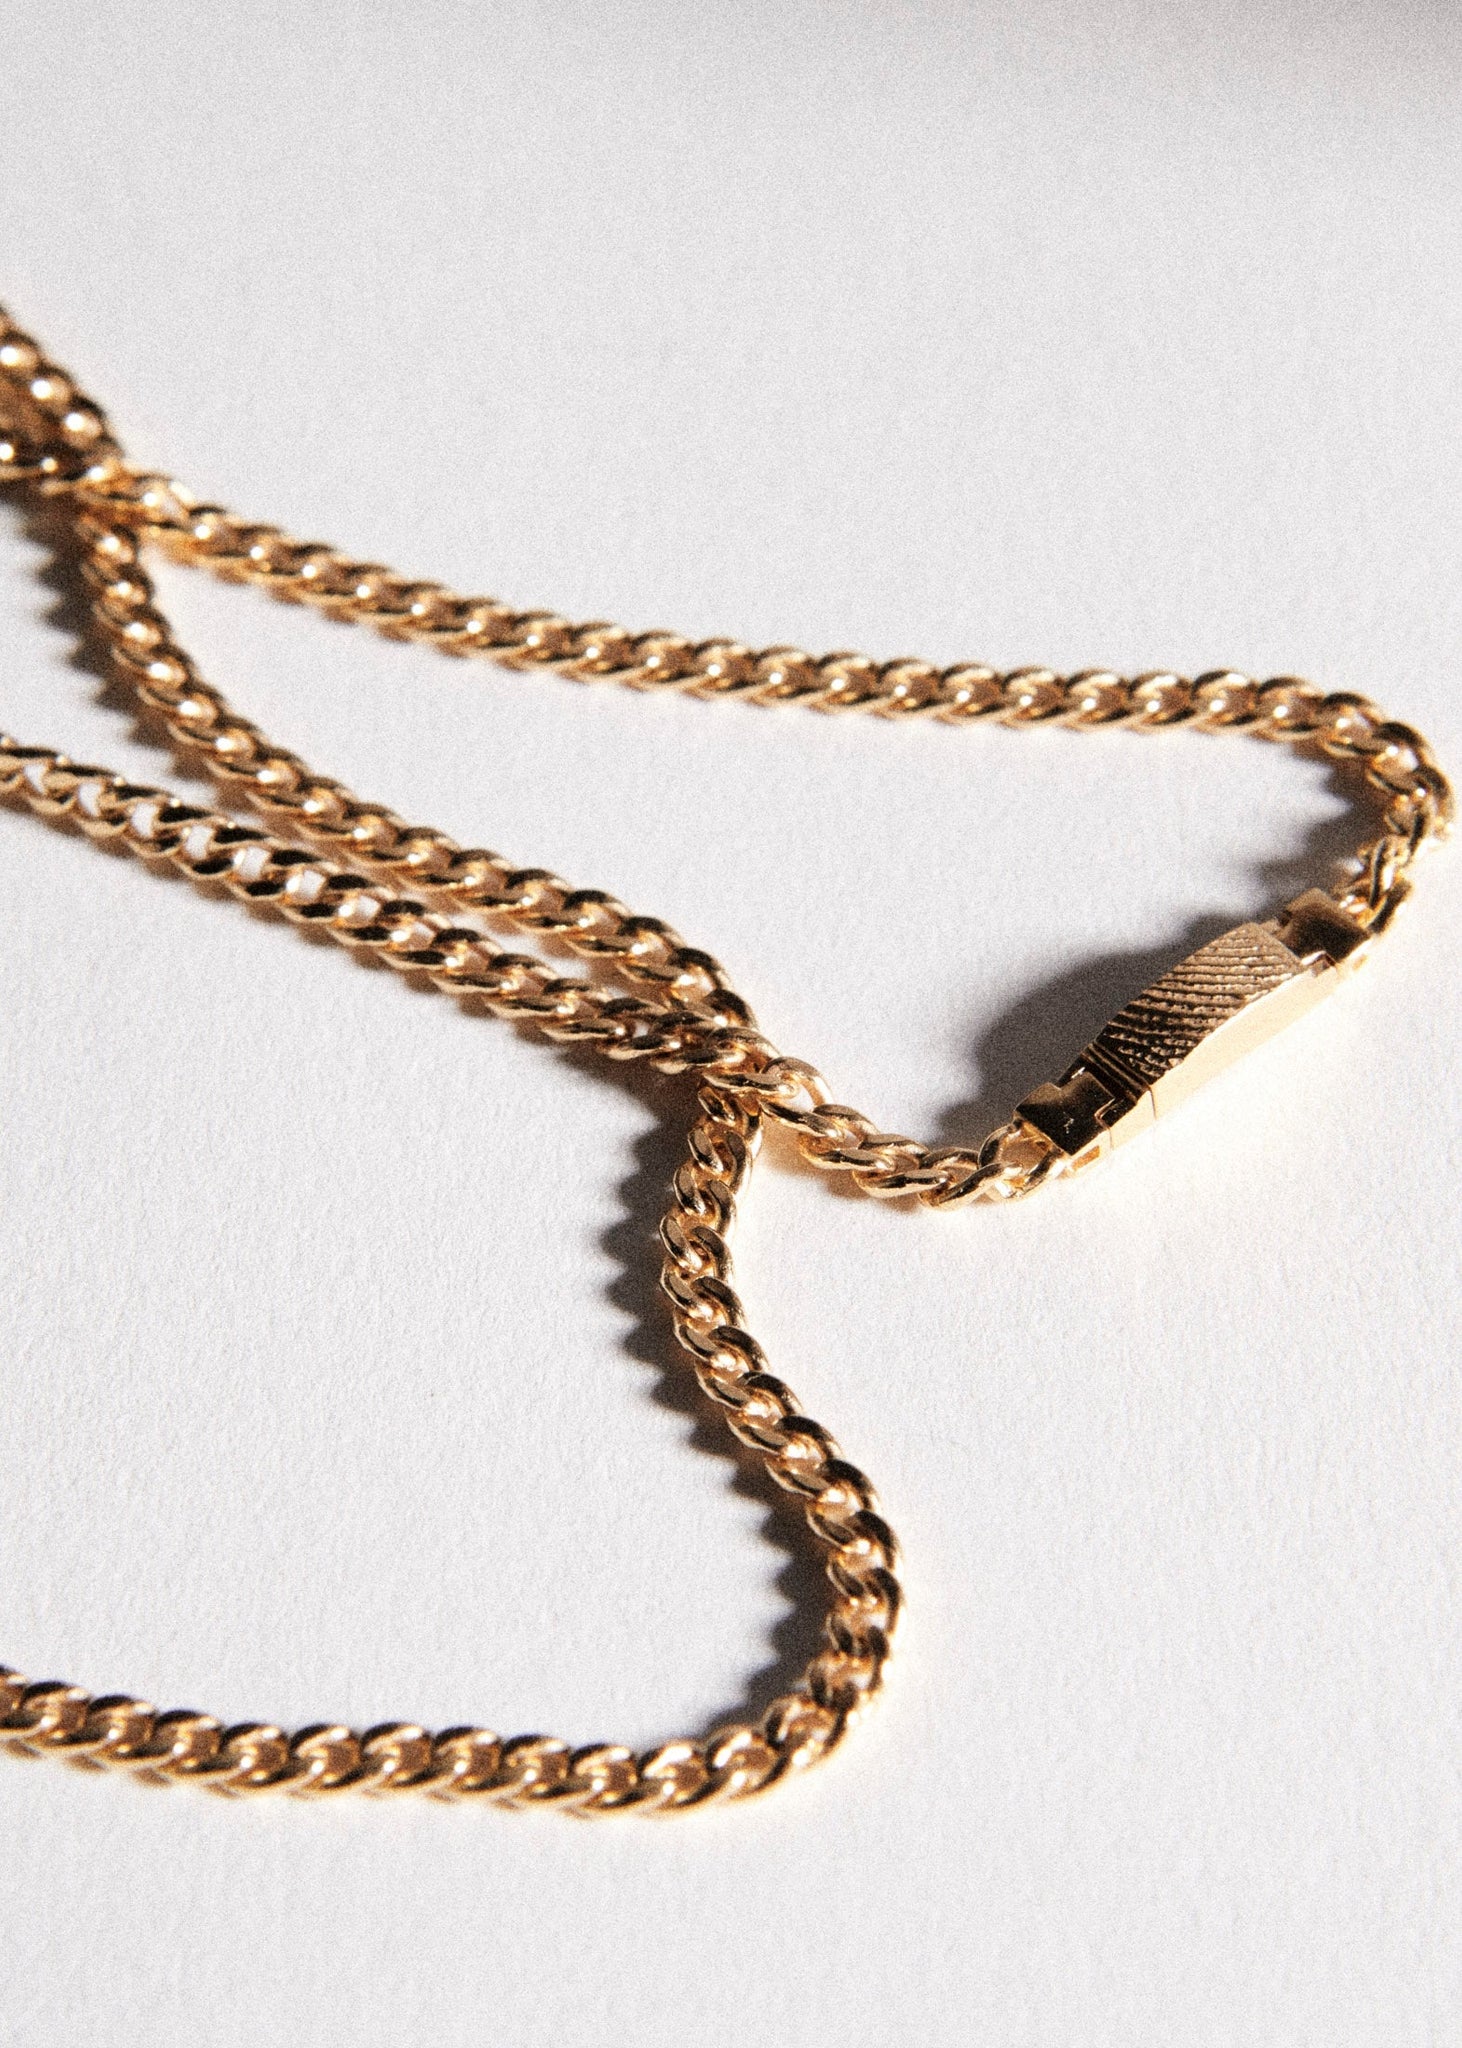 Molded Chained Necklace Mini - Necklaces - Cornelia Webb - 1